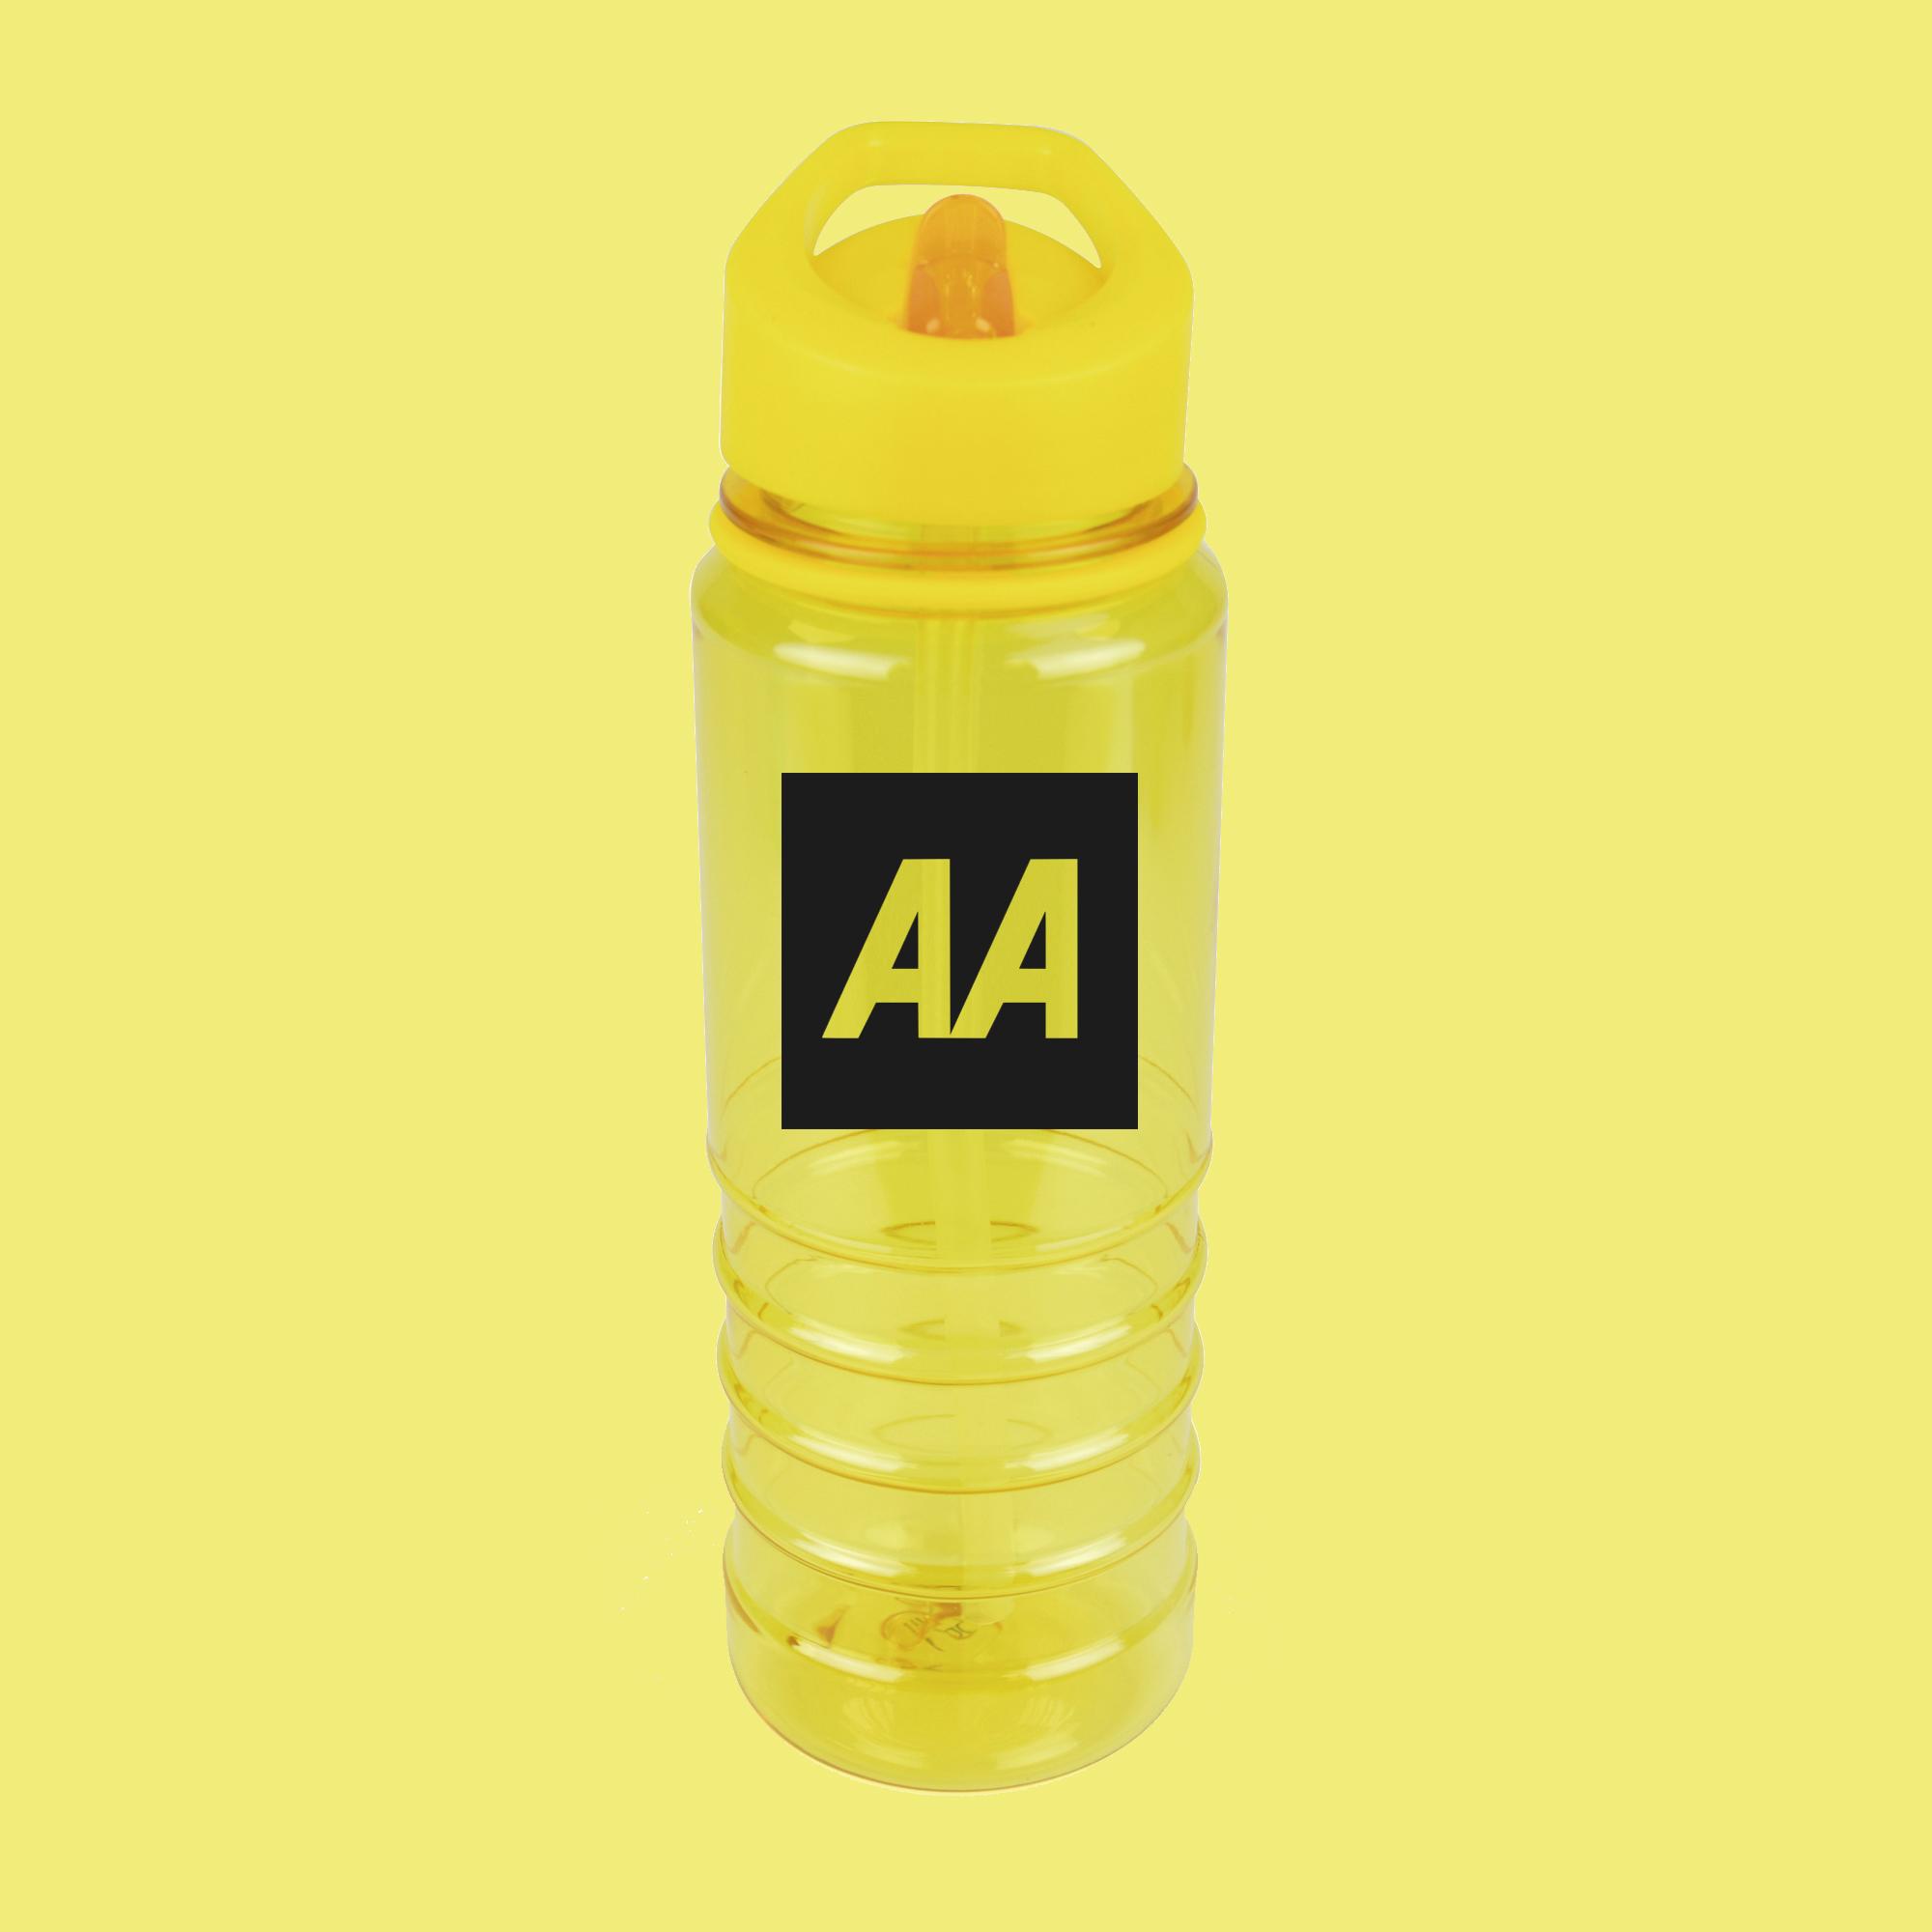 Logo printed around the bottle